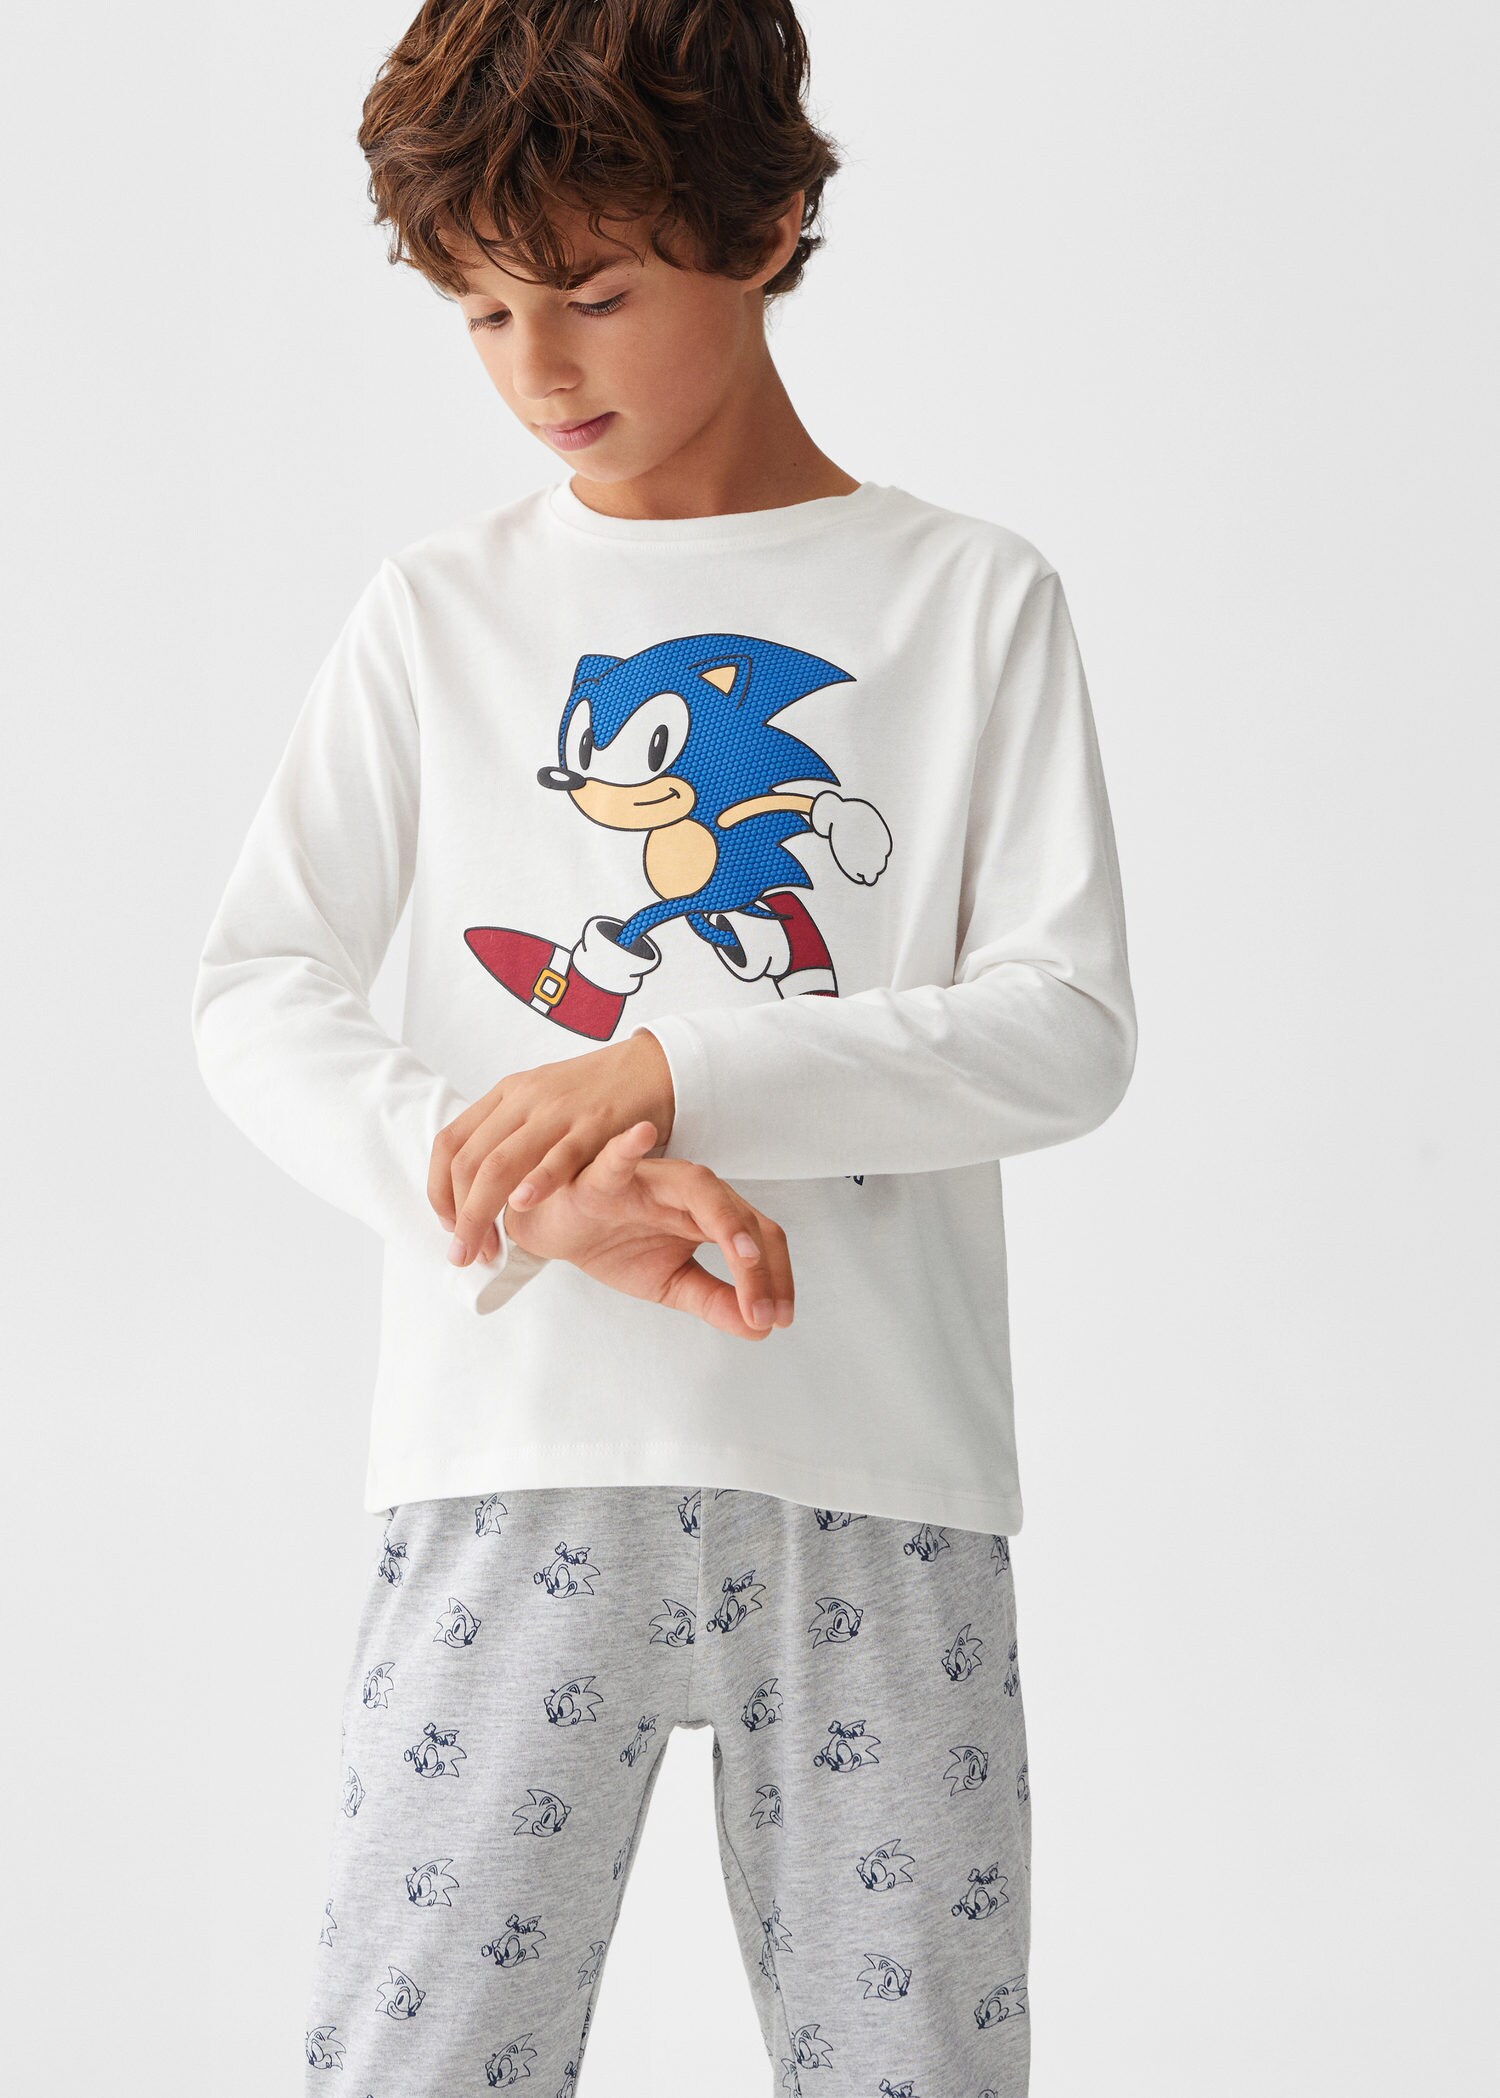 Pijama niño Sonic 12 años 152cm